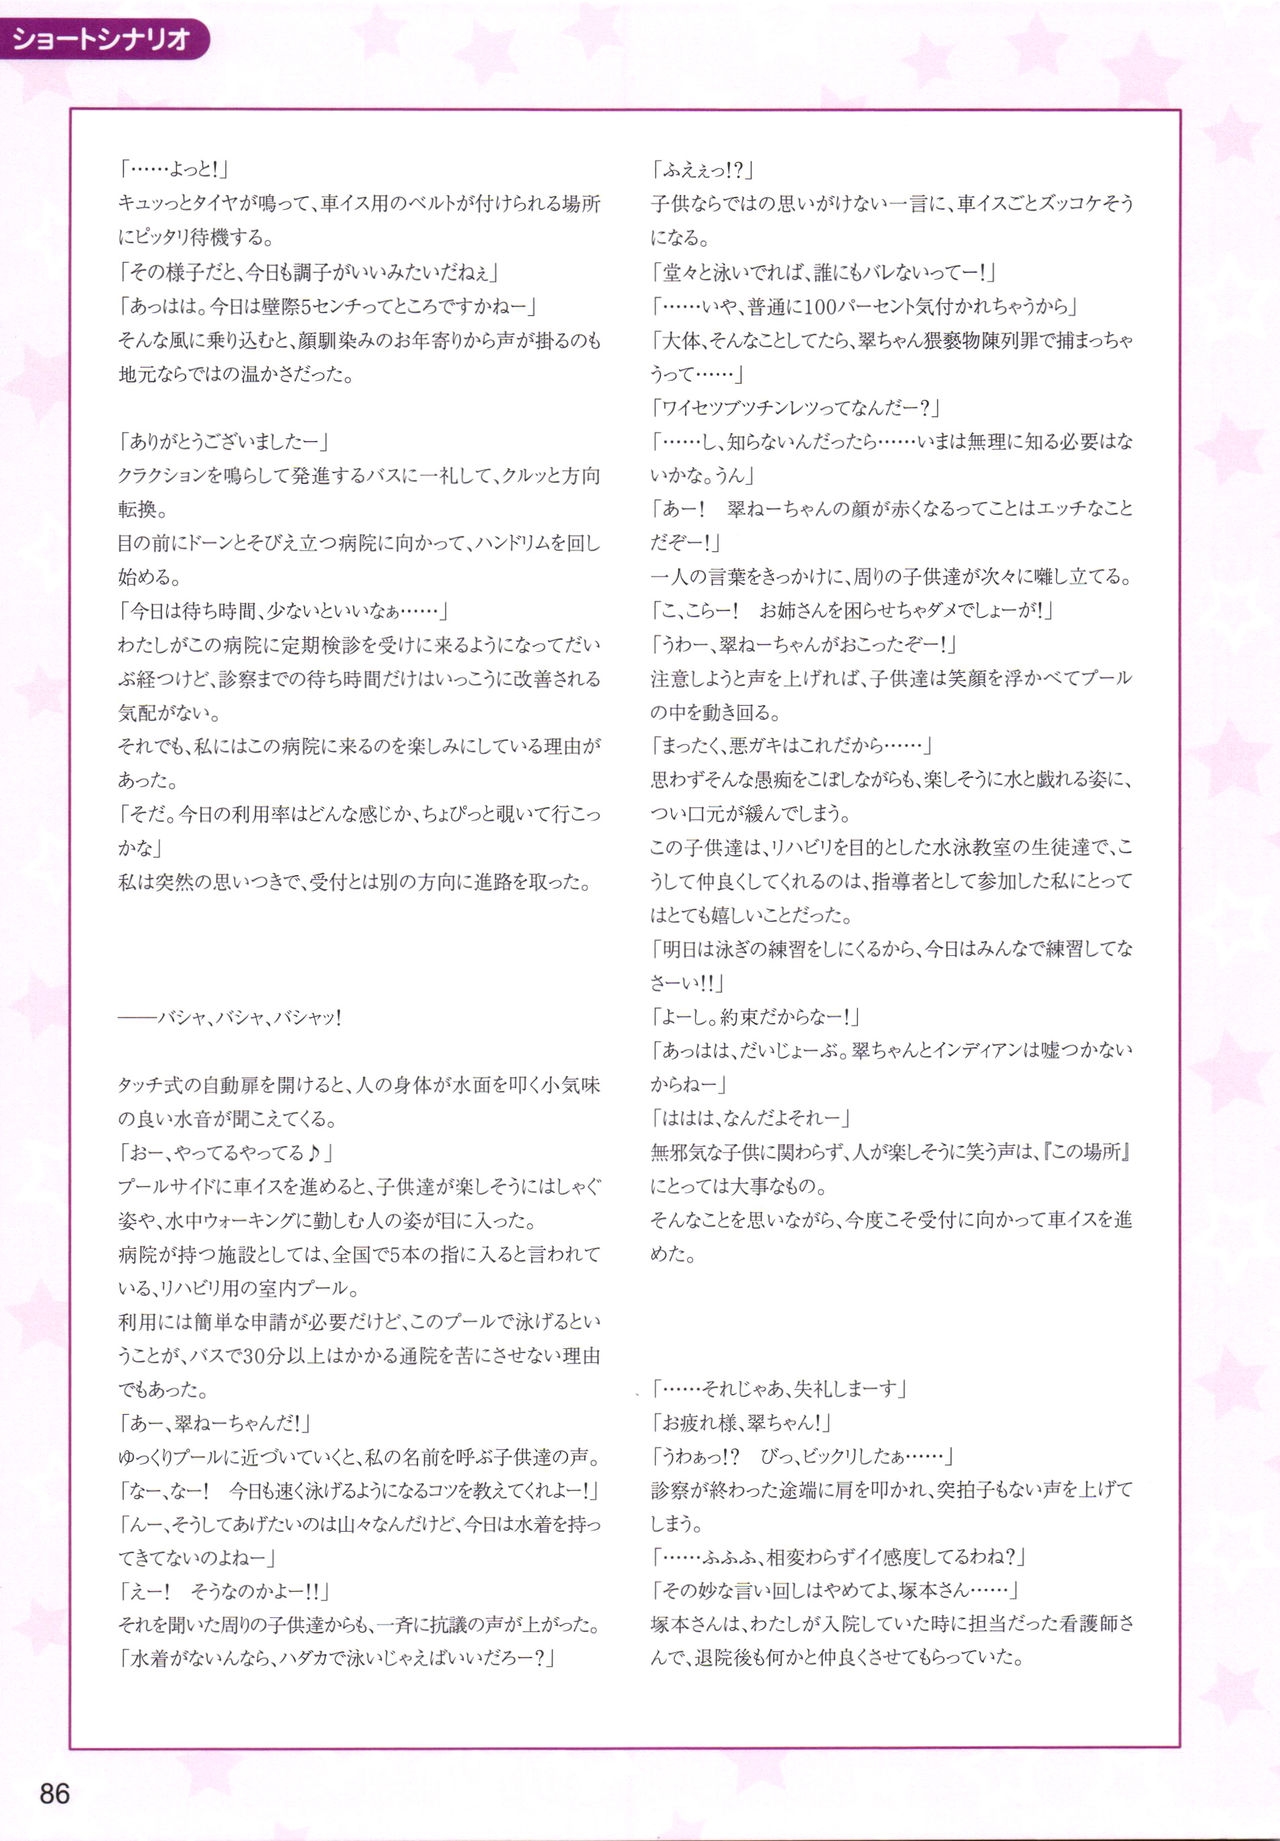 [FrontWing] Hoshiuta syokai tokuten Fanbook ～Memories～ 89